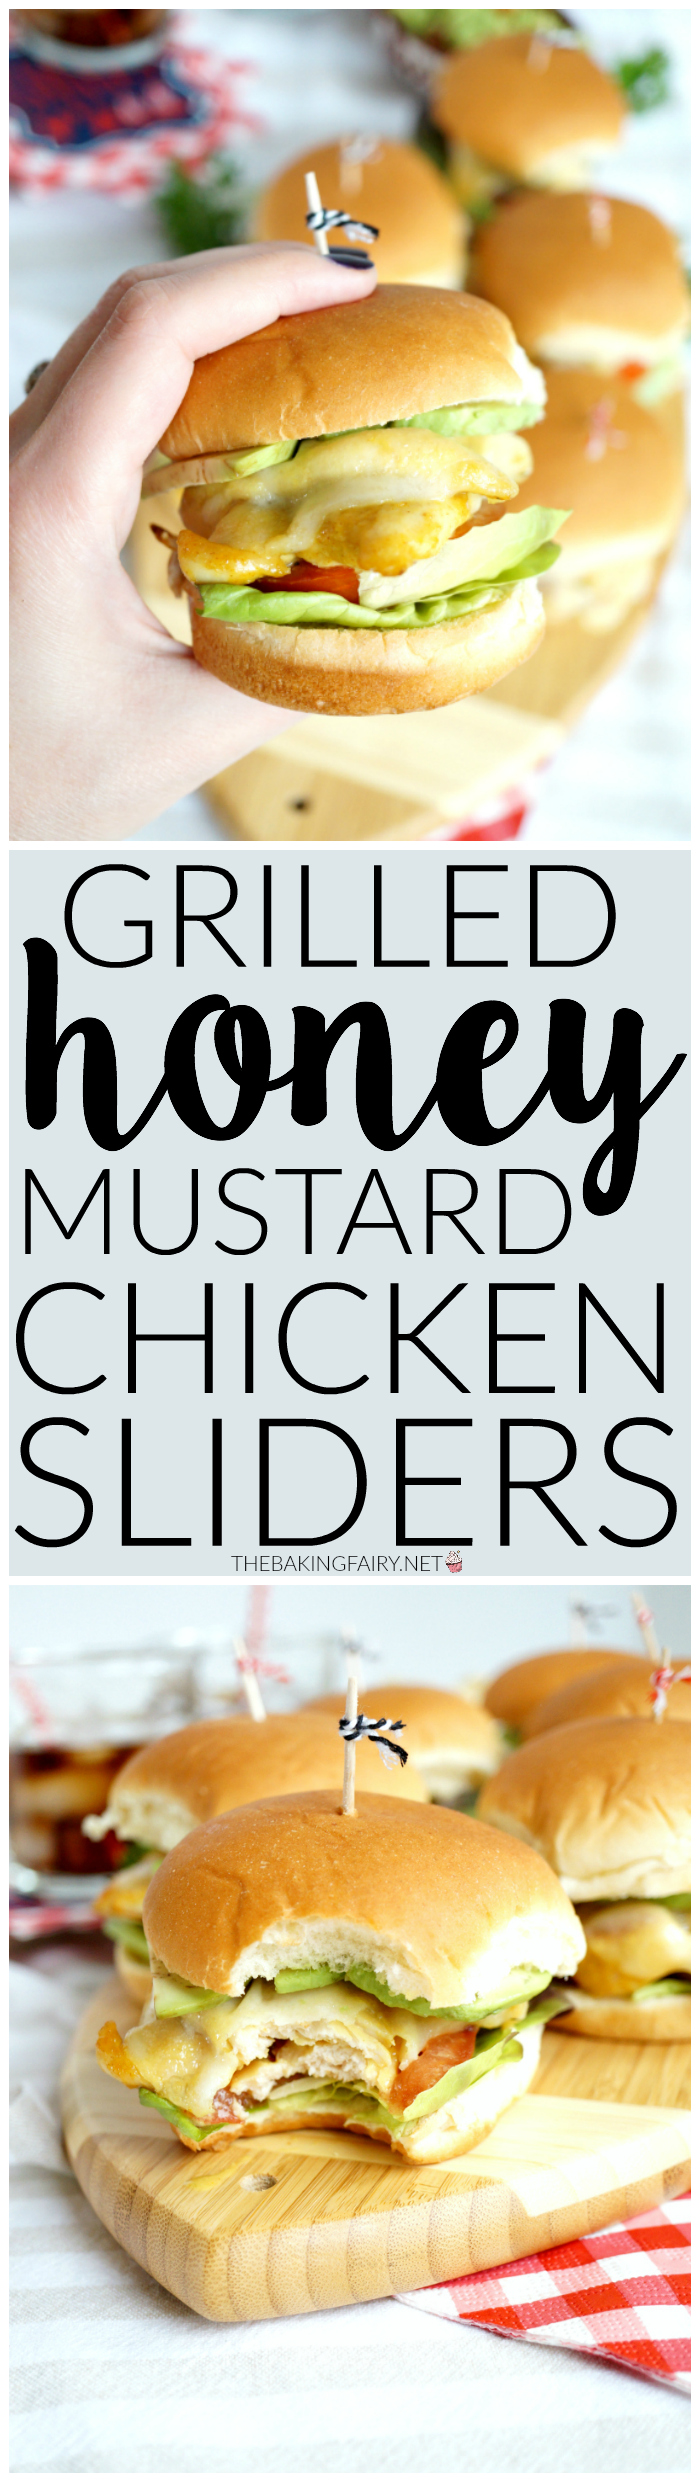 msg 4 21+: grilled honey mustard chicken sliders | The Baking Fairy #BeersAndBuns #ad @krogerco @pepperidgefarm @warsteinerusa